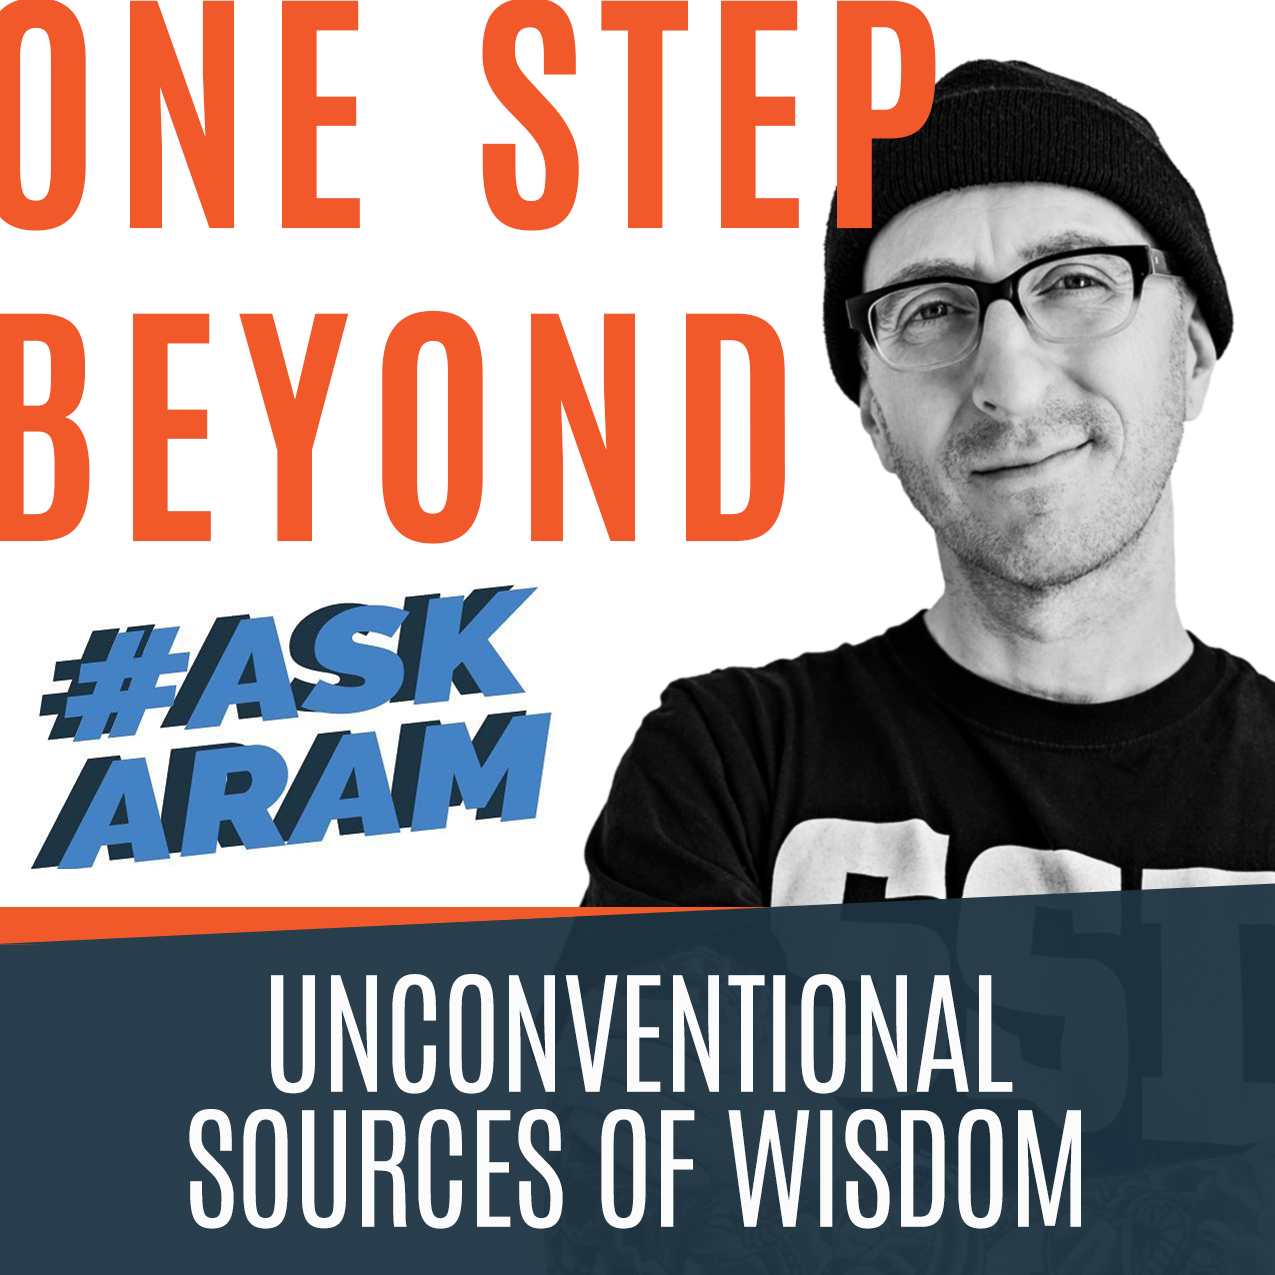 Ask Aram - Unconventional Sources of Wisdom